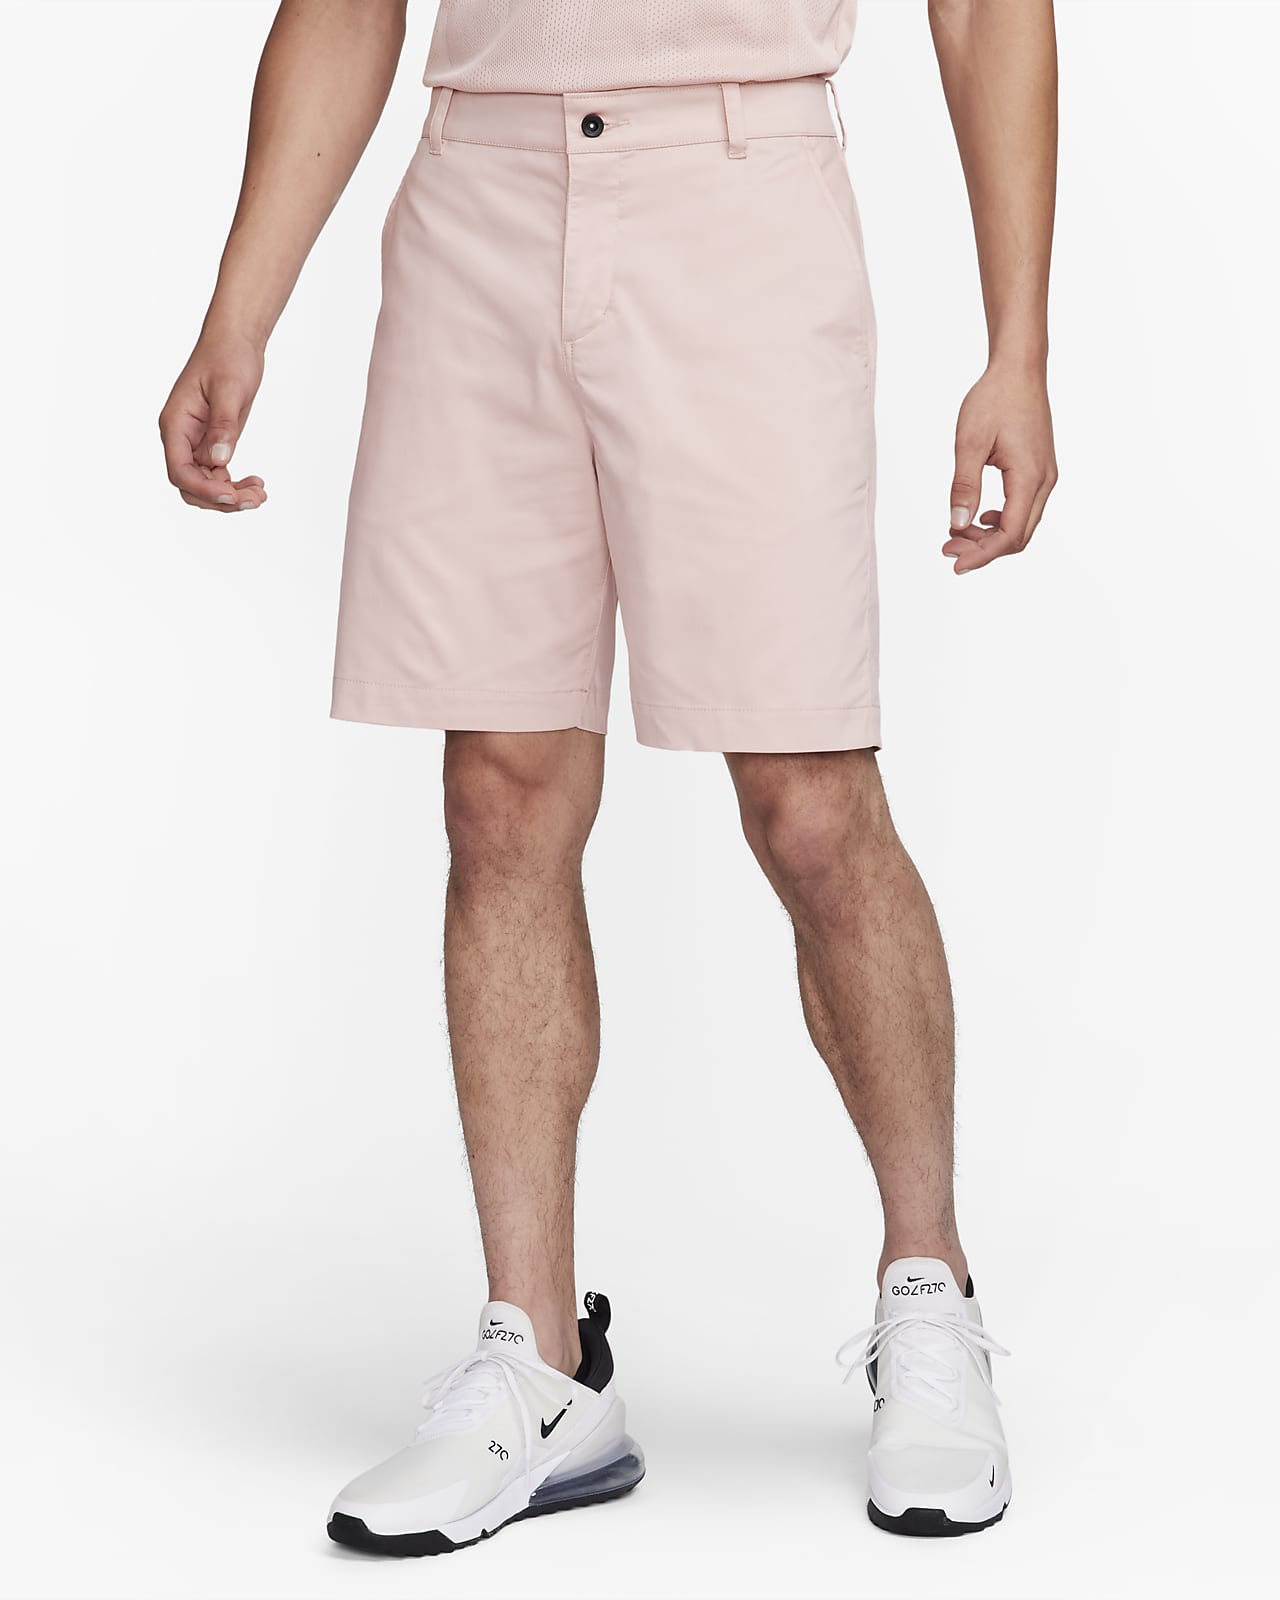 Nike Dri-FIT UV Men's 9 Golf Chino Shorts.